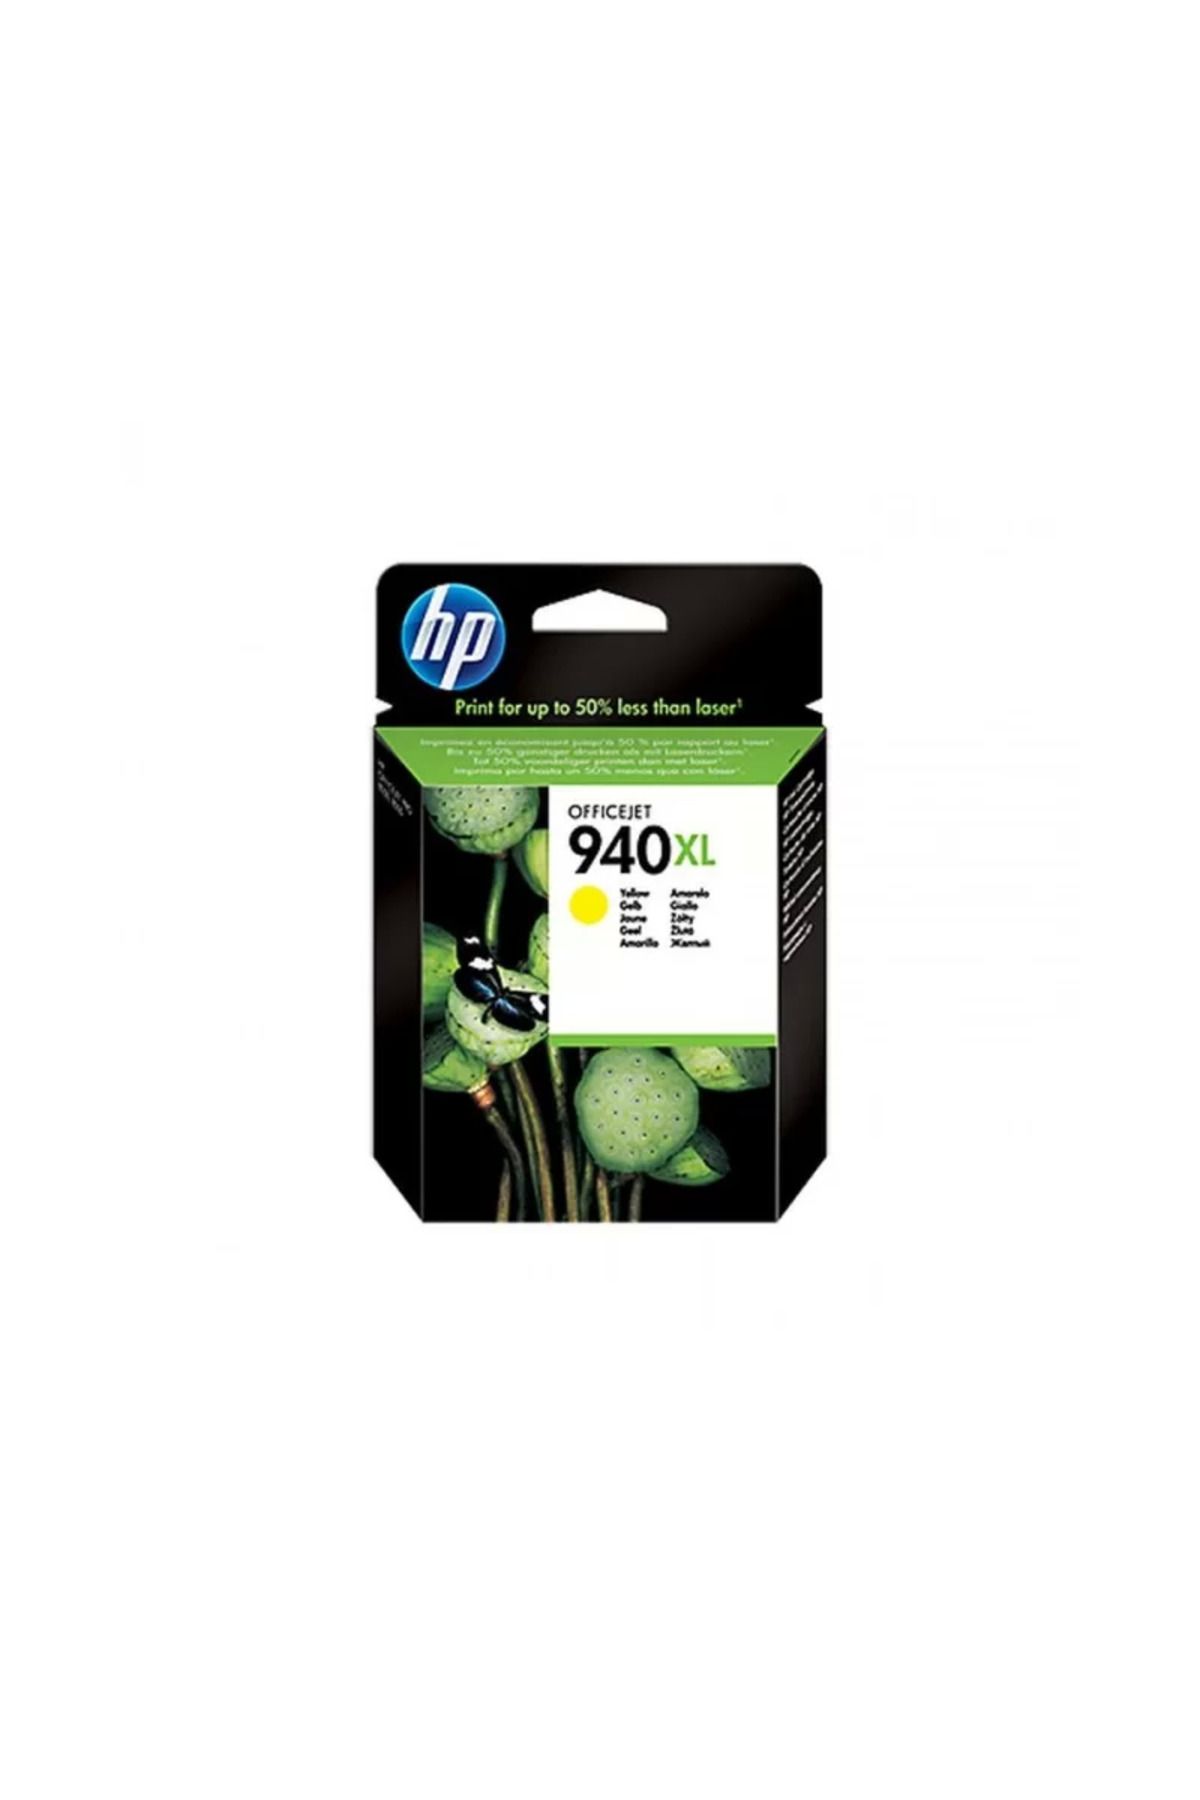 HP Outlet C4909ae 940xl Sarı Mürekkep Kartuş 1400 Sayfa Yüksek Kapasite (pro8000 Pro8500 Pro